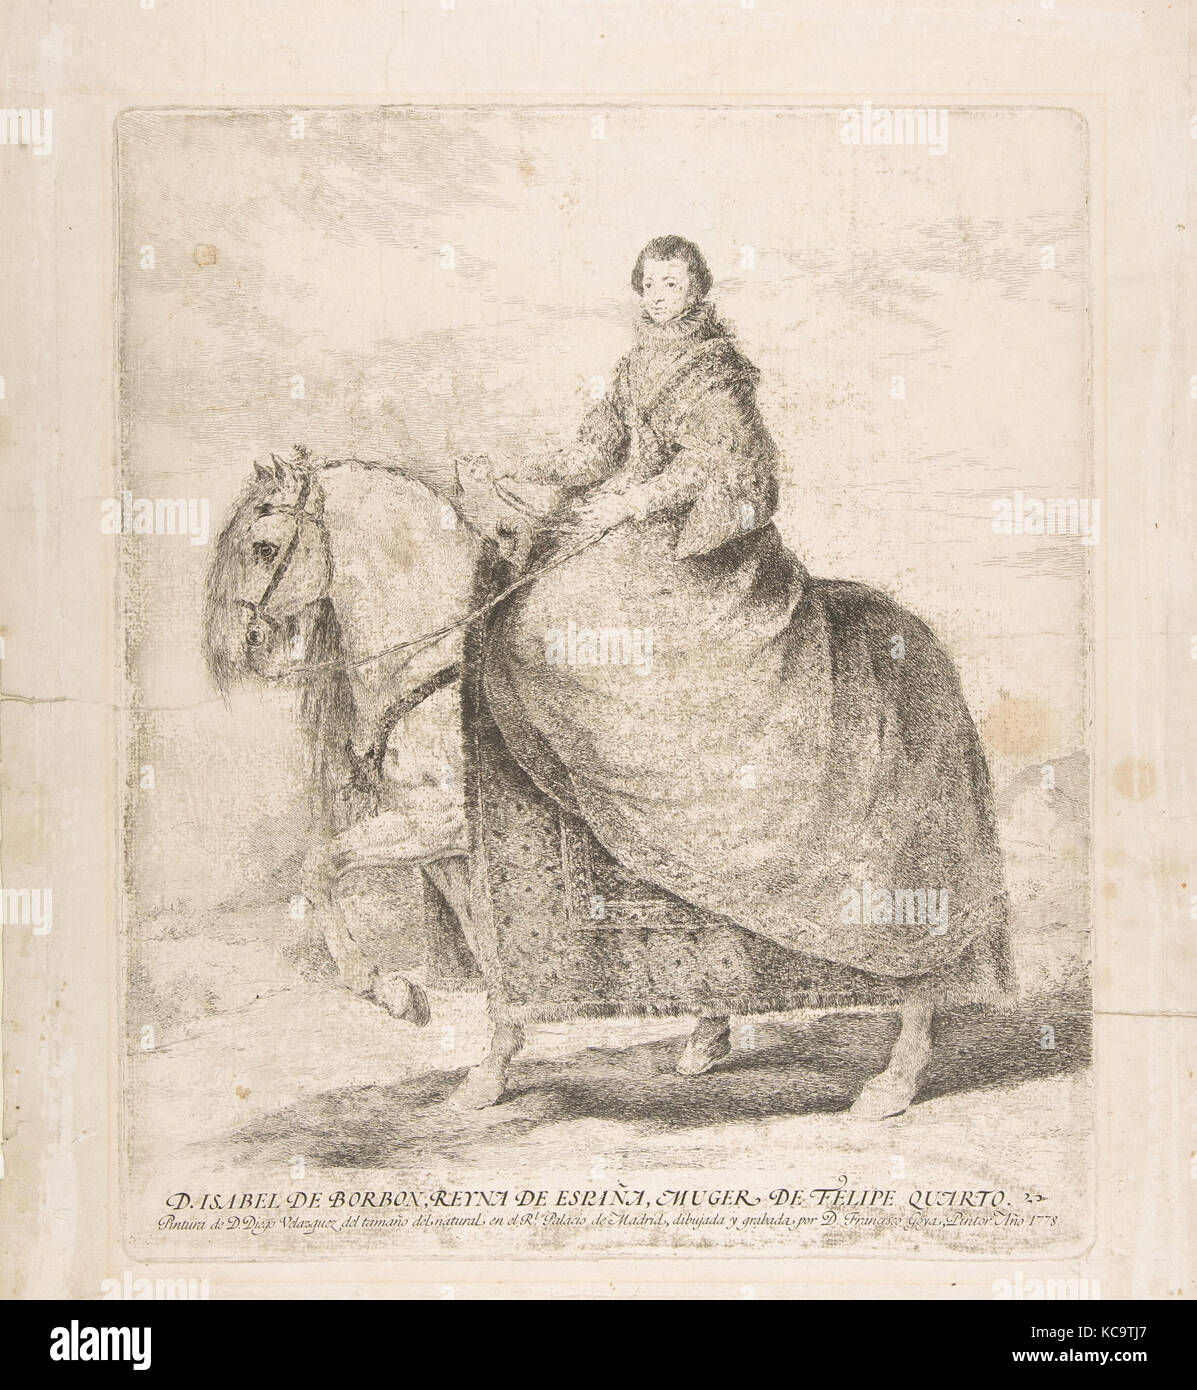 Isabel of Bourbon, Queen of Spain and wife of Philip IV (D. Isabel de Borbon, Reyna de España, muger de Felipe Quarto), Goya Stock Photo